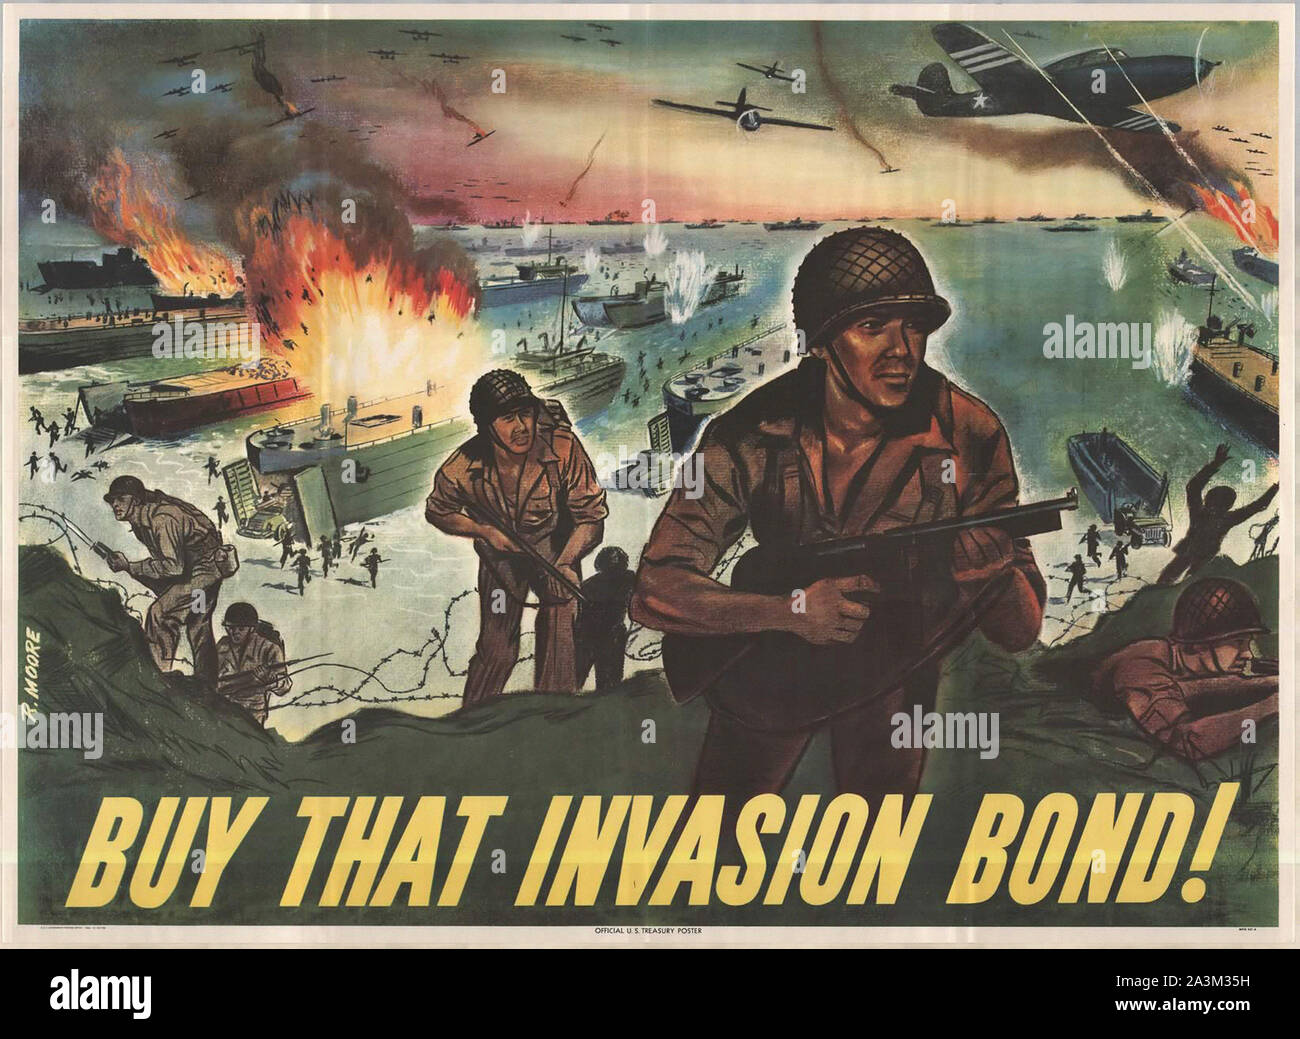 Buy That Invasion Bond ! normandy invasion - Vintage U.S Propaganda poster Stock Photo